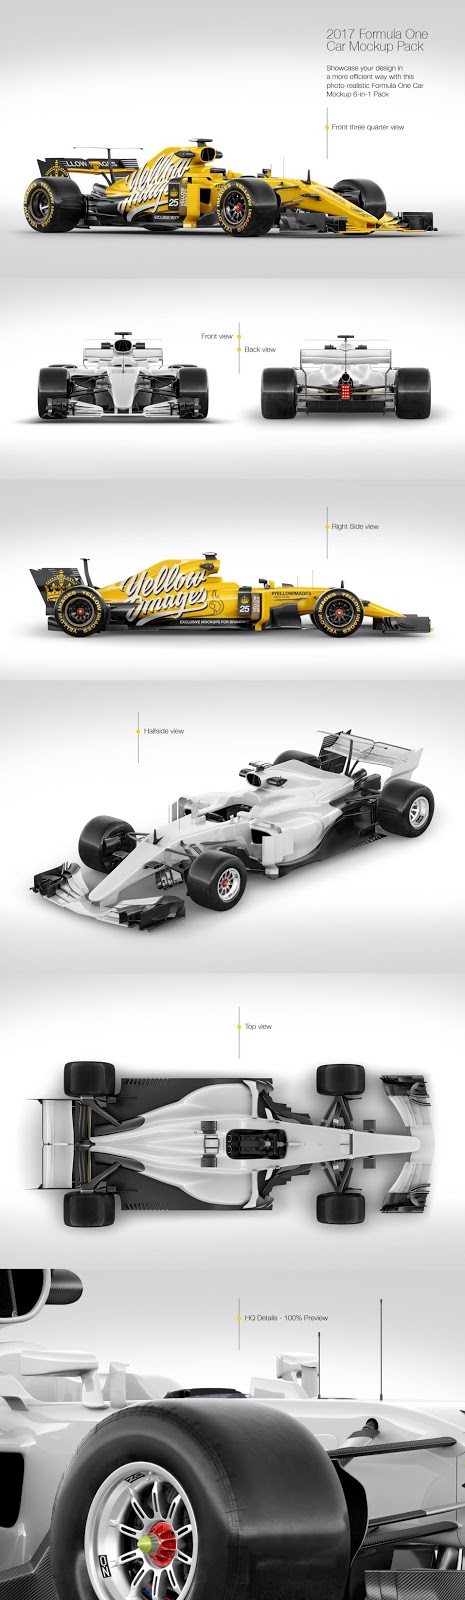 2017 Formula 1 Car Mockup Pack